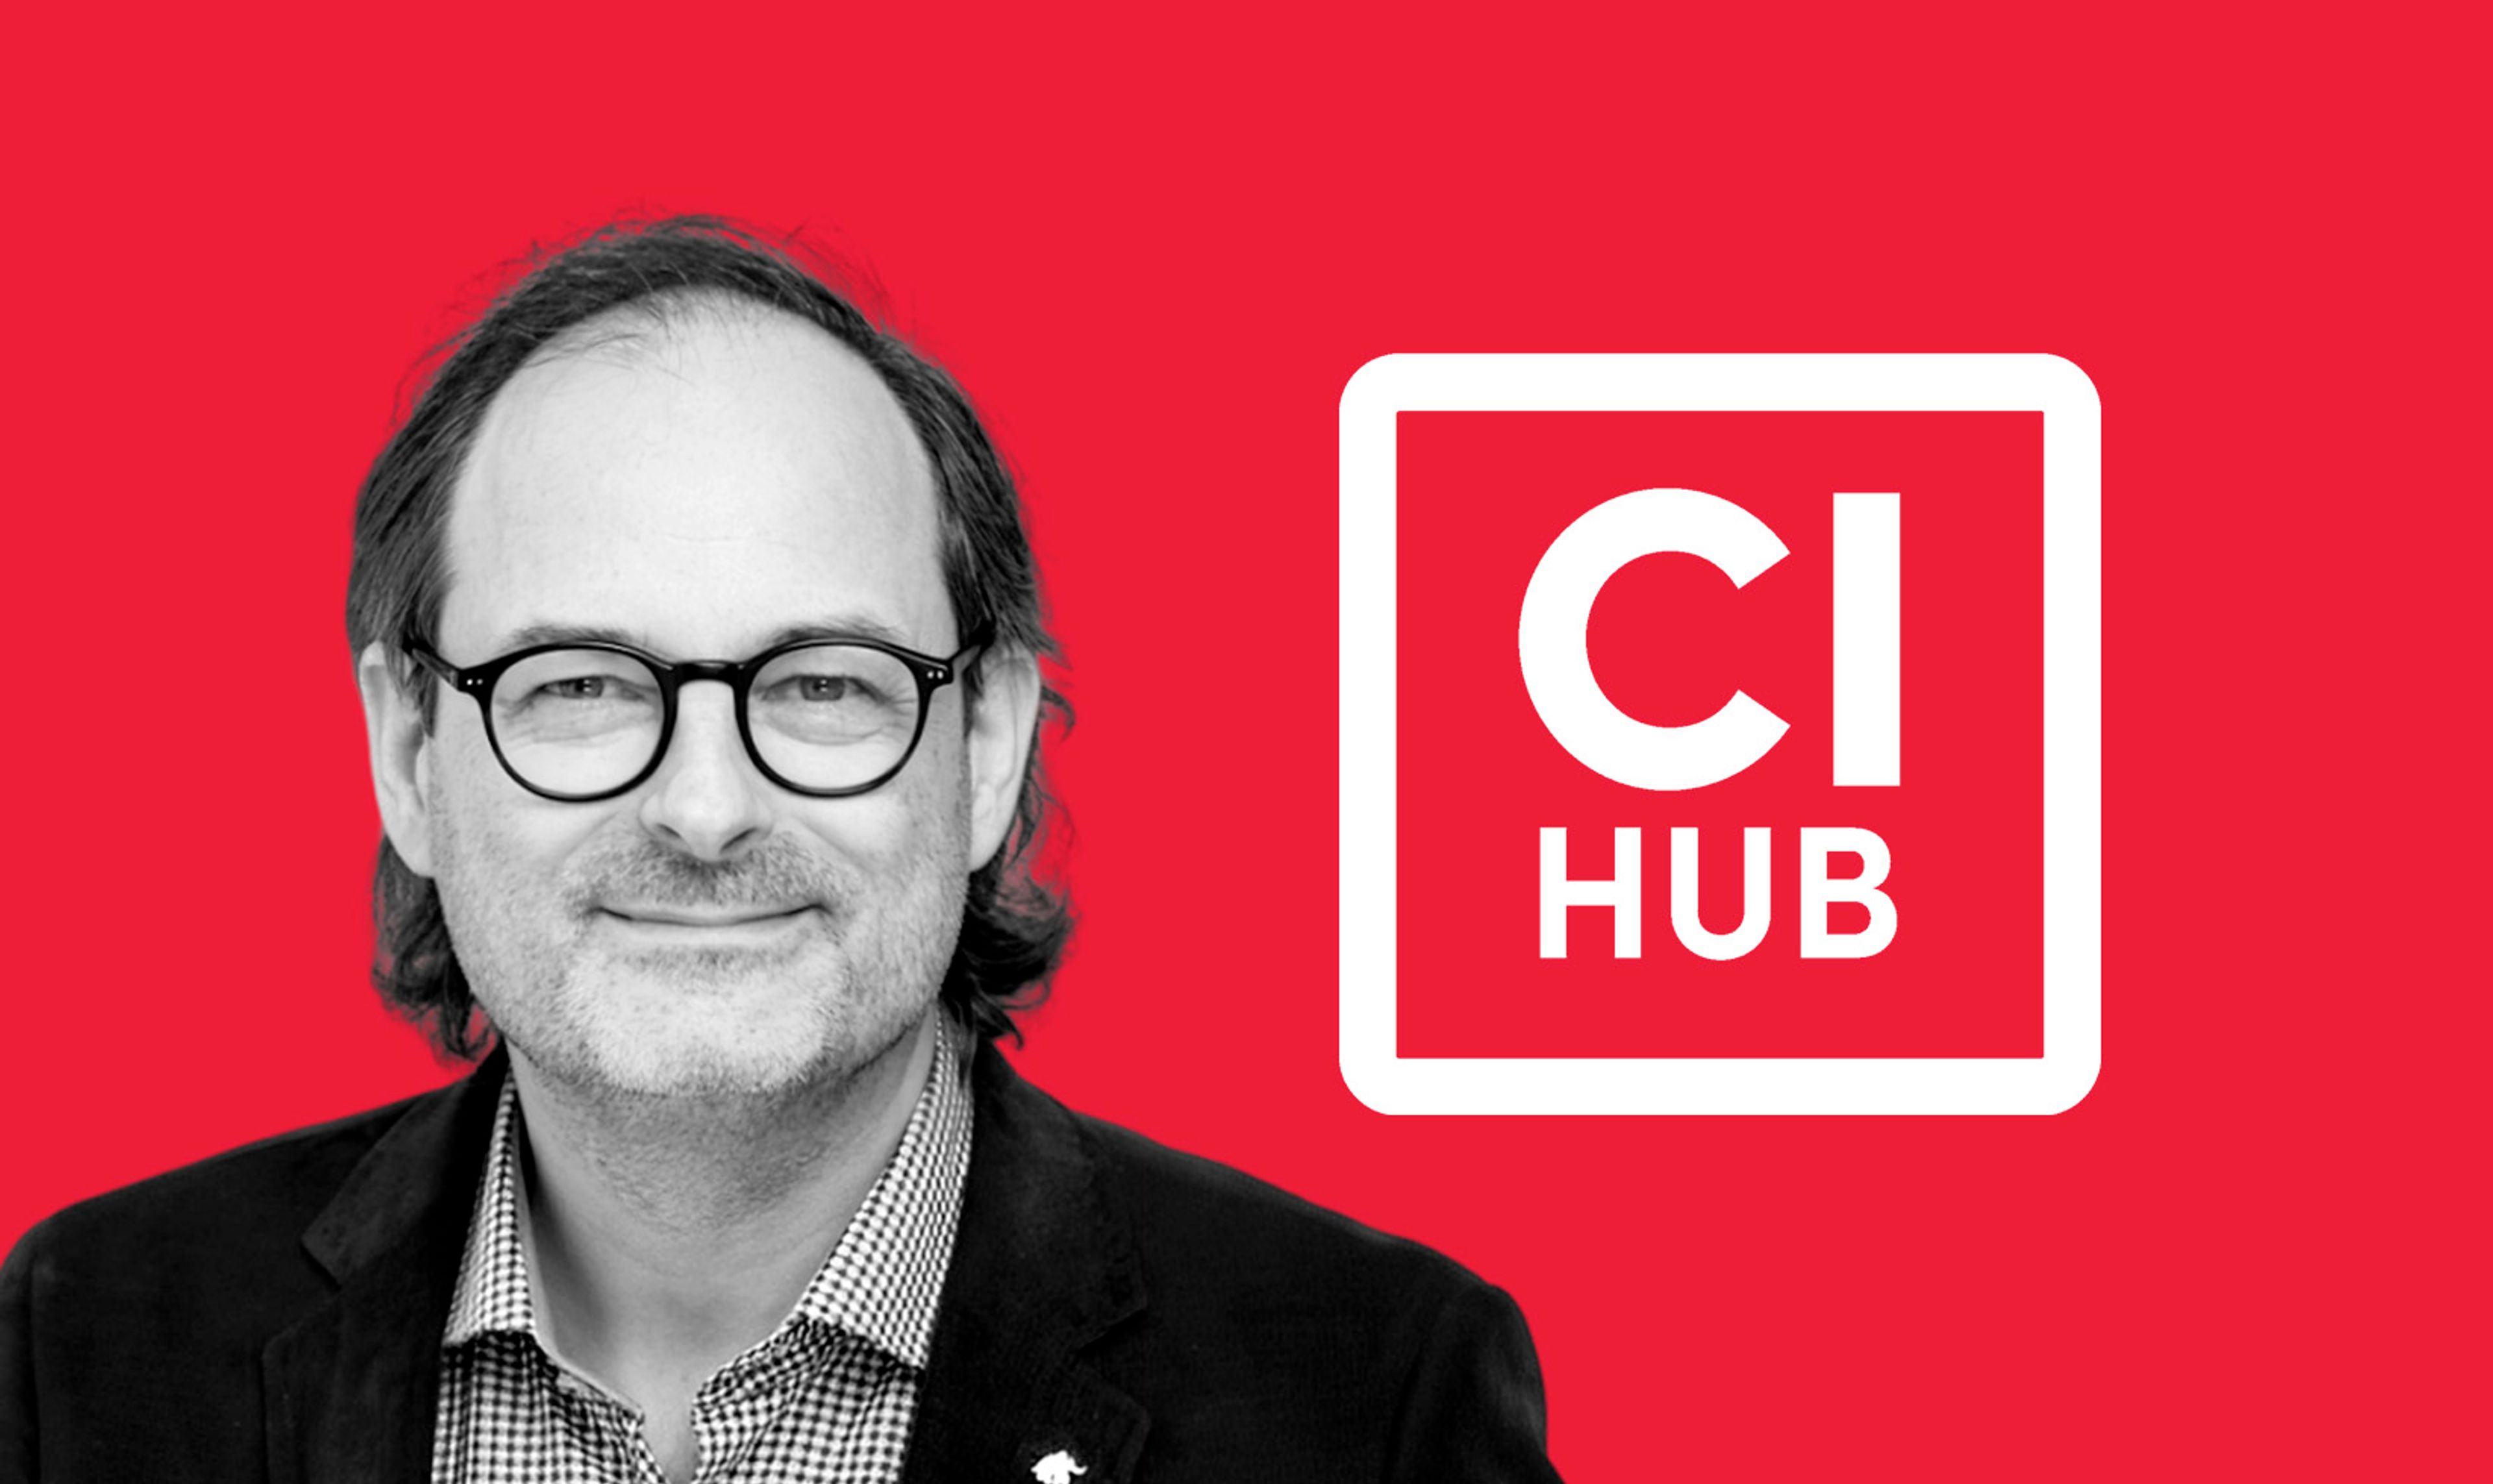 CI Hub founder headshot and logo